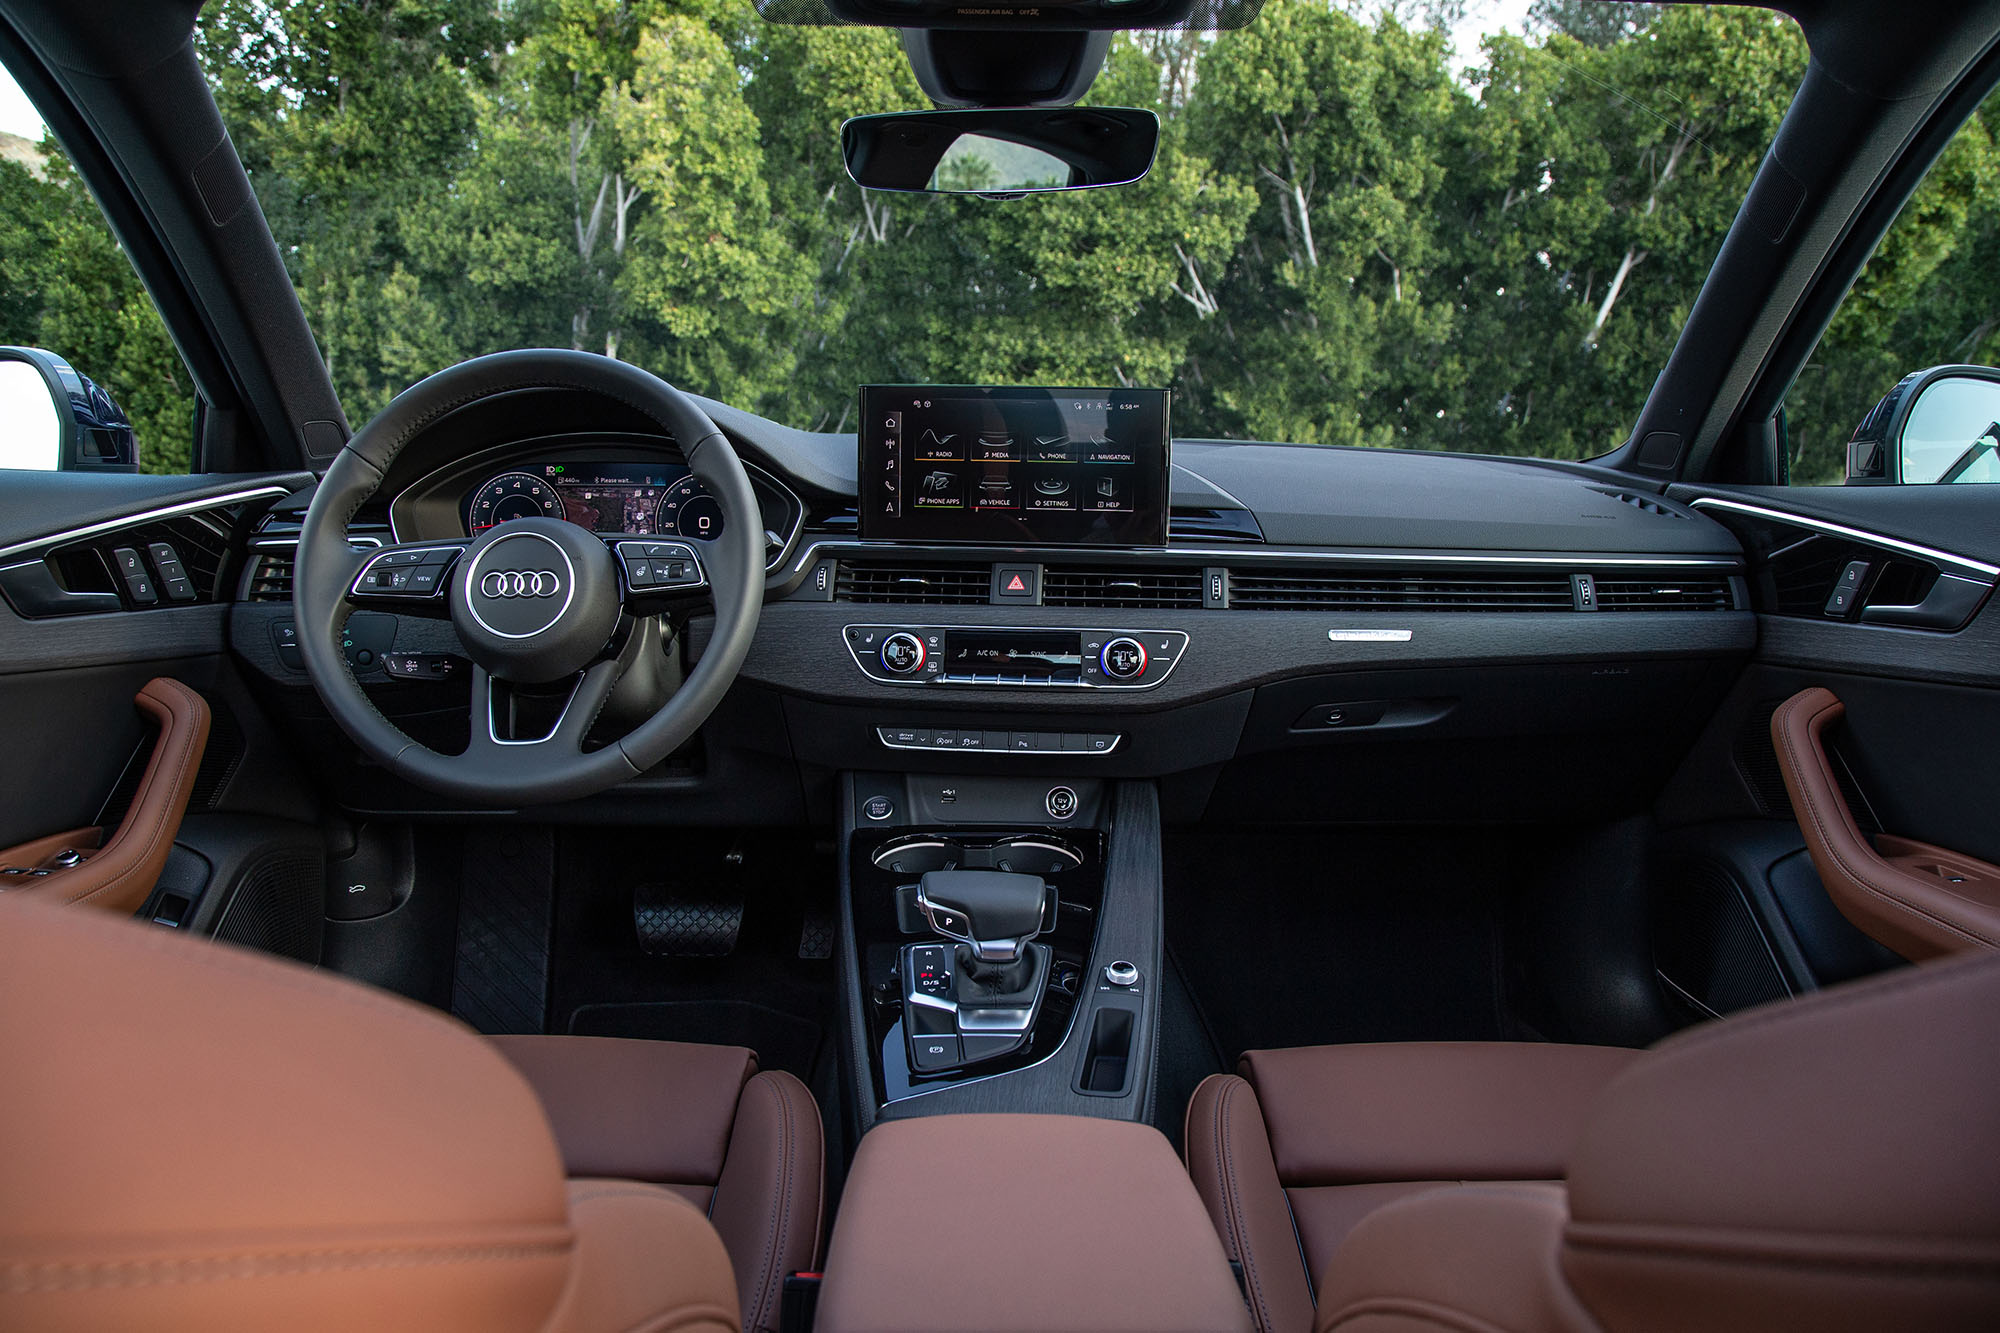 Audi A4 interior in tan